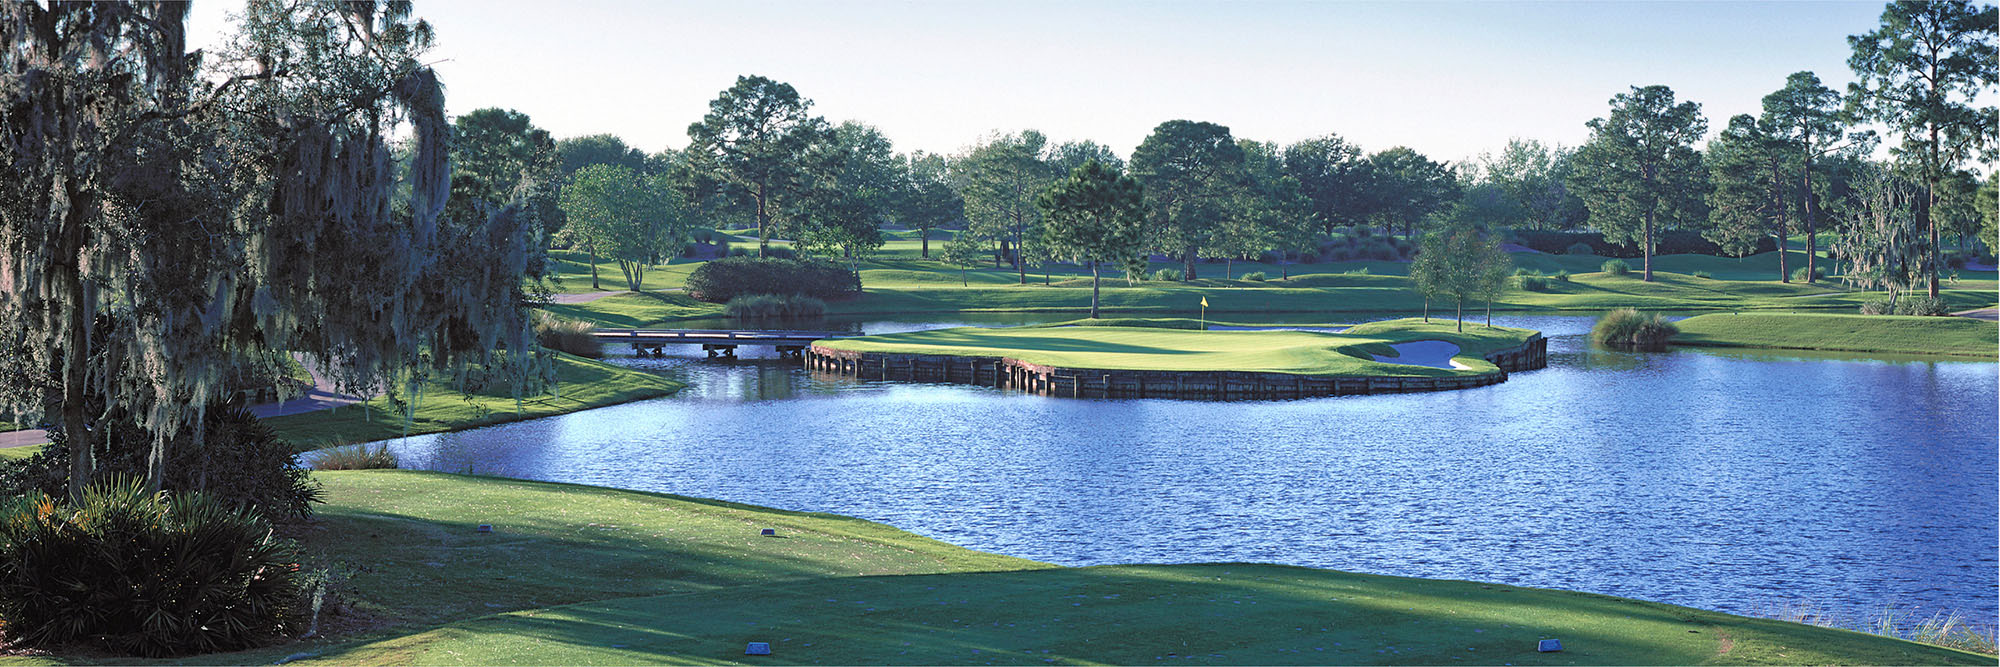 Golf Course Image - Grand Cypress No. 5